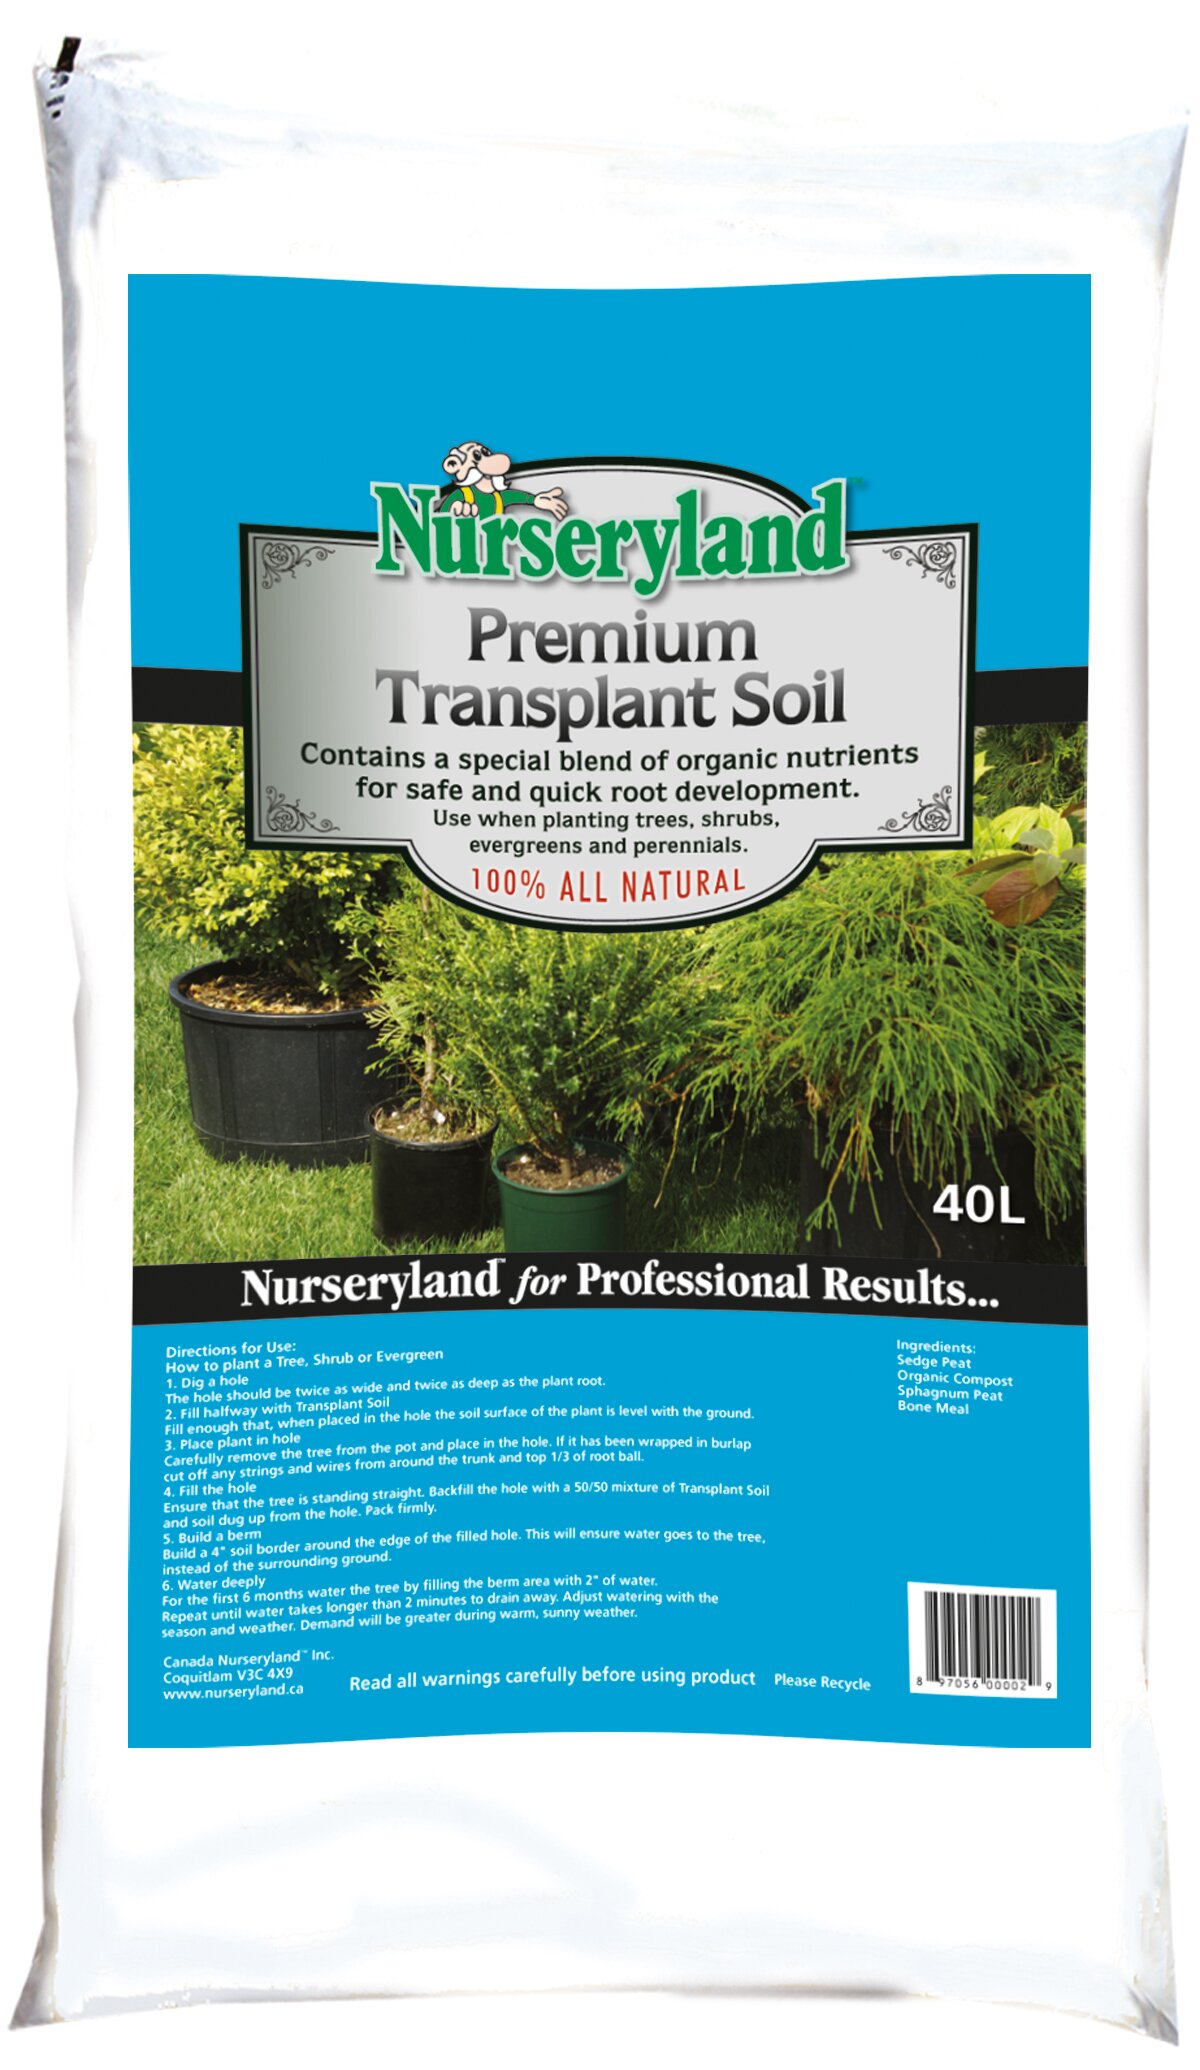 Nurseryland Premium Transplant Soil